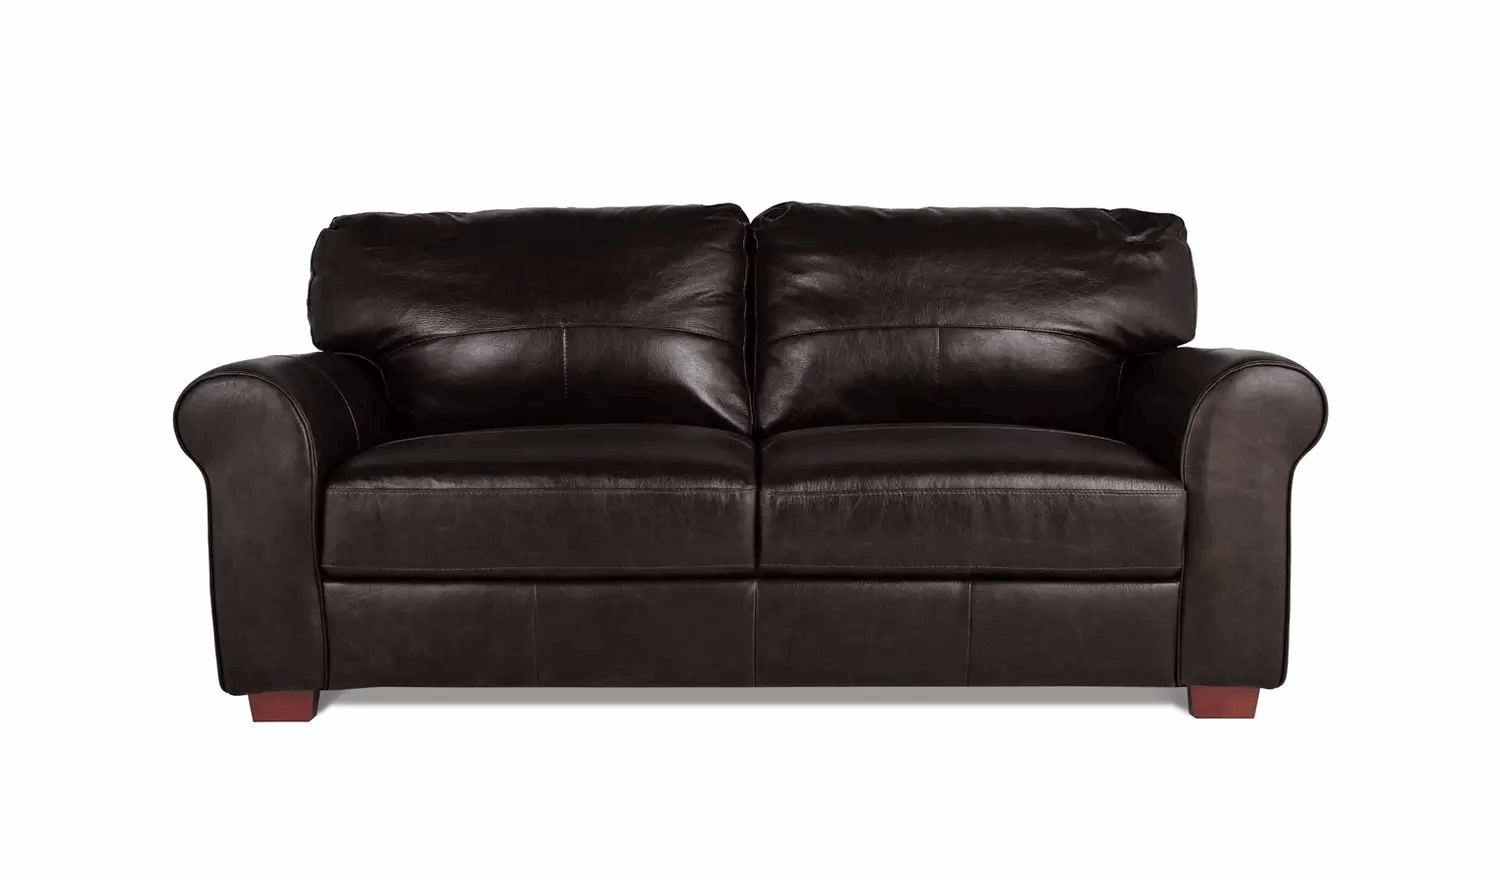 Habitat Salisbury 3 Seater Leather Sofa - Dark Brown(100% Leather)